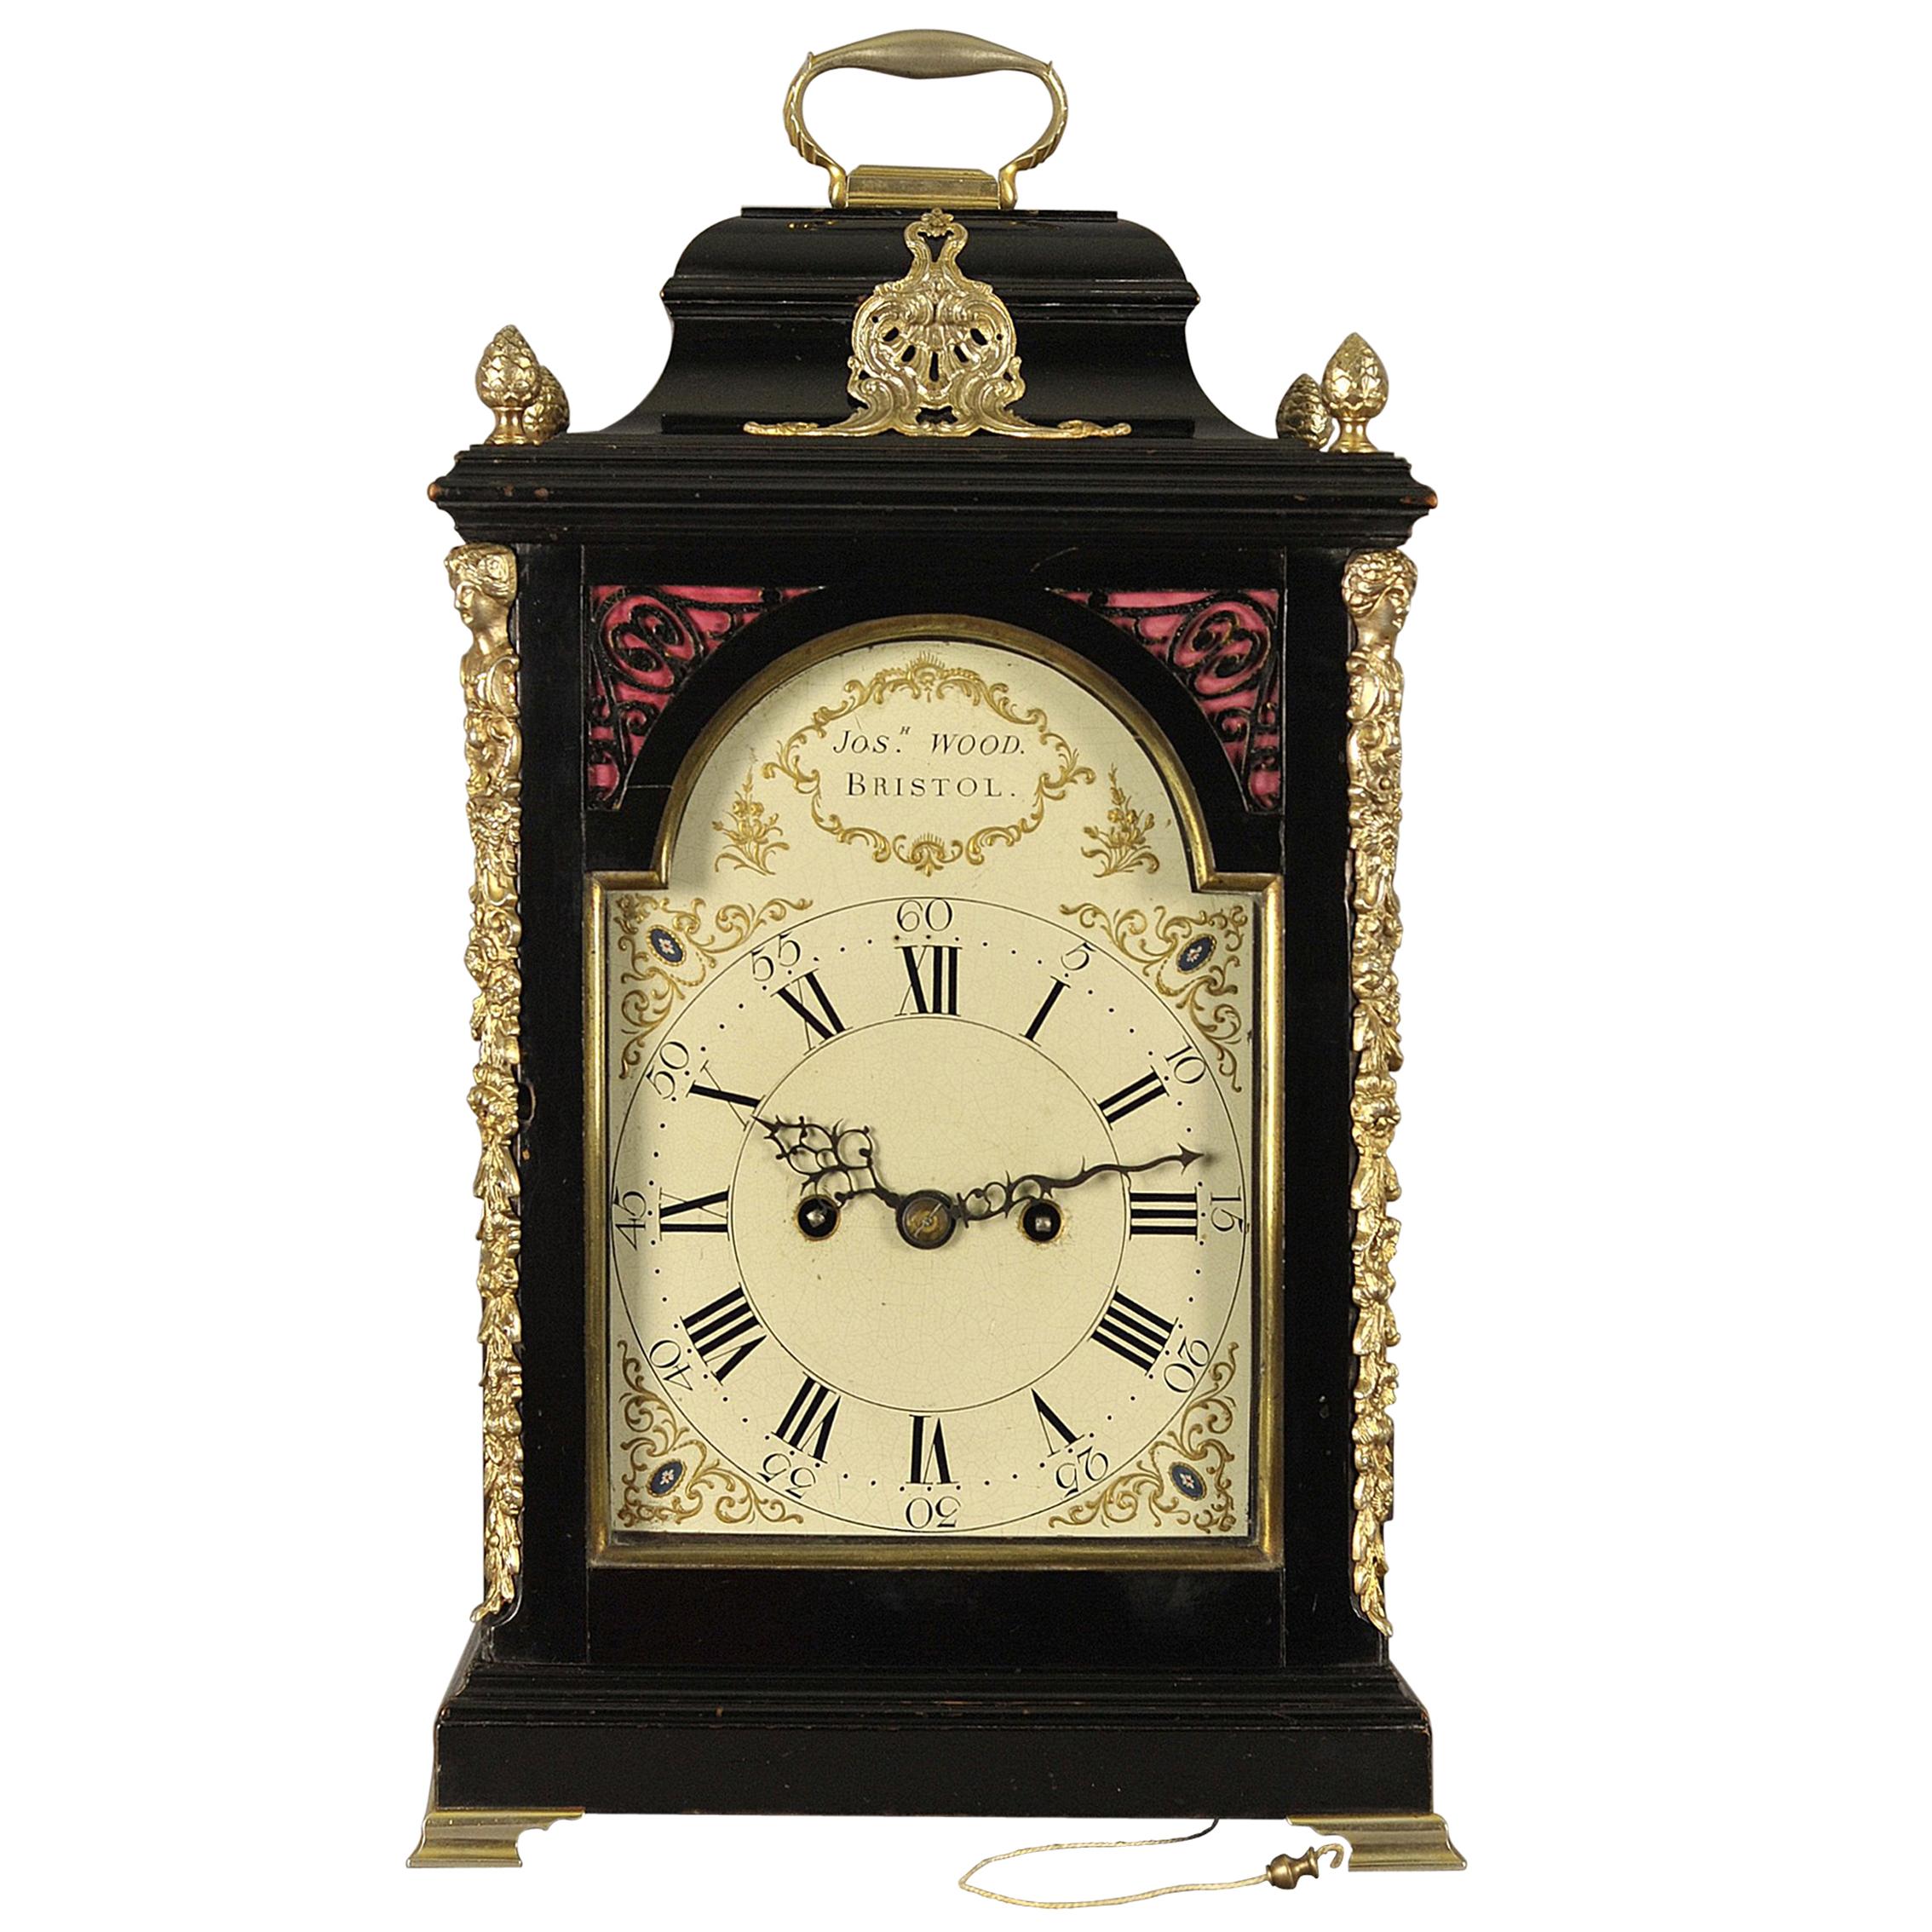 Fine Verge Ebonized Bracket Clock, Joseph Wood, Bristol For Sale